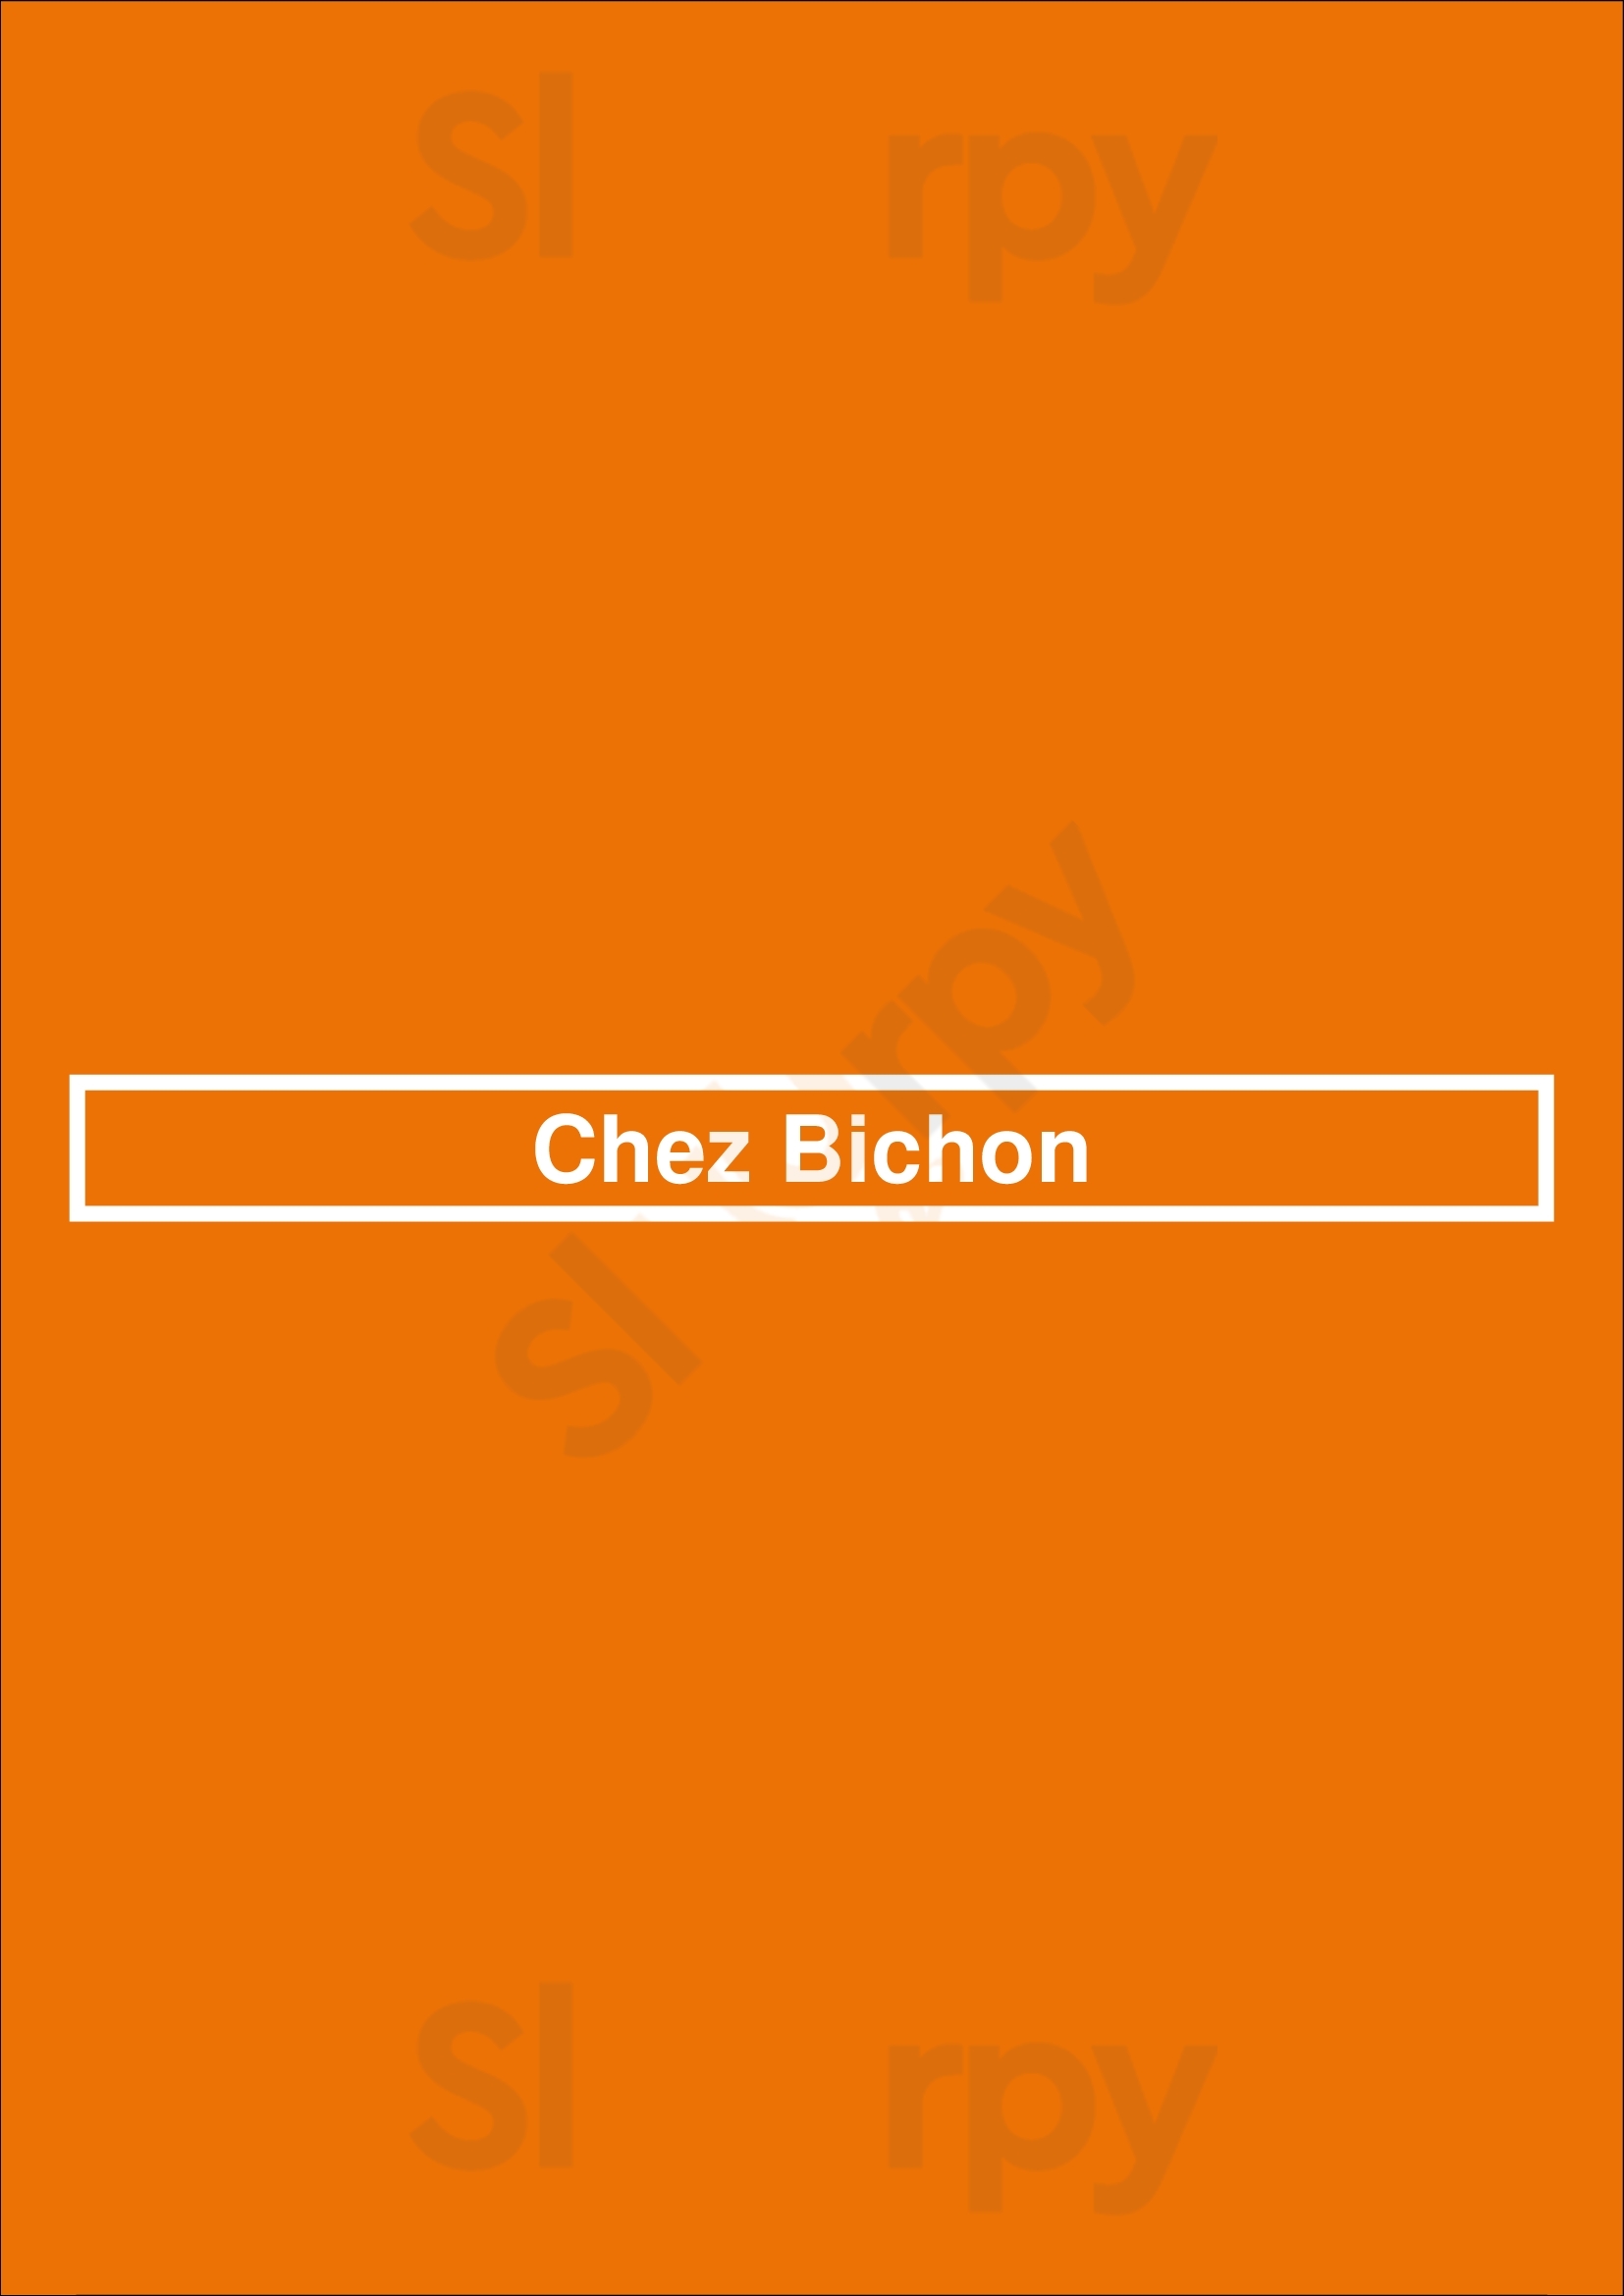 Chez Bichon Bruxelles Menu - 1